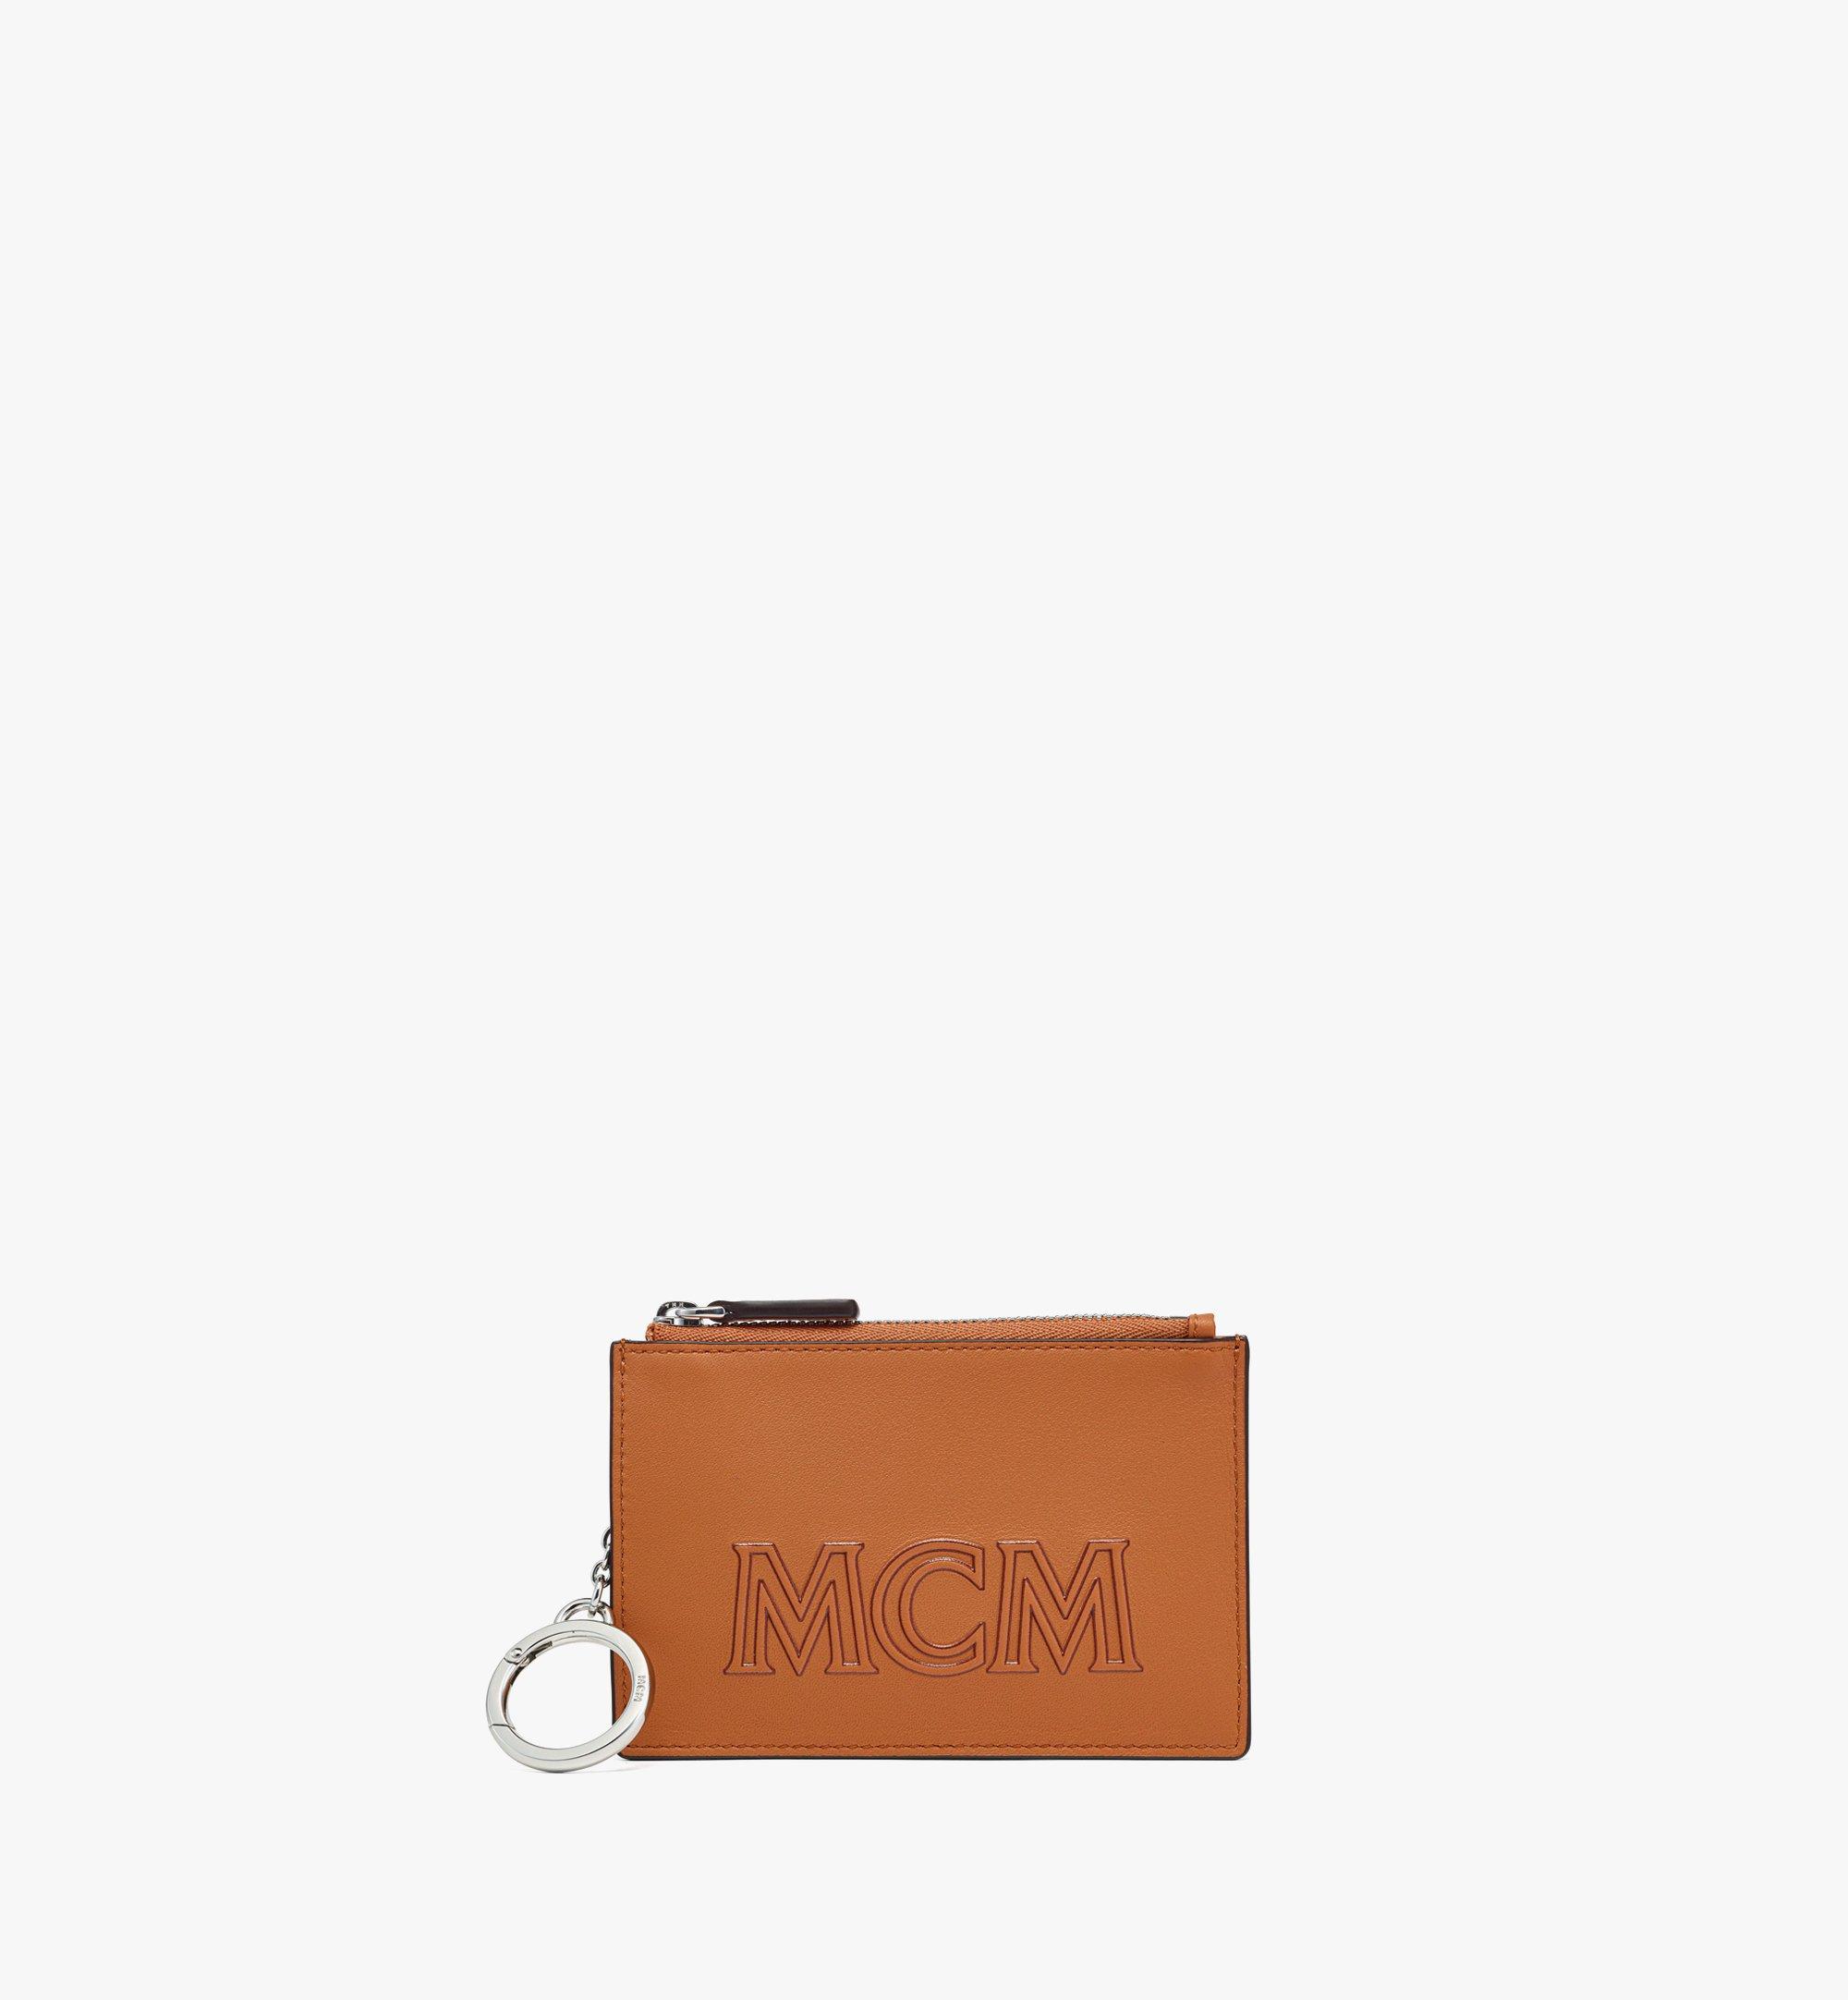 MCM 財布、キーケース